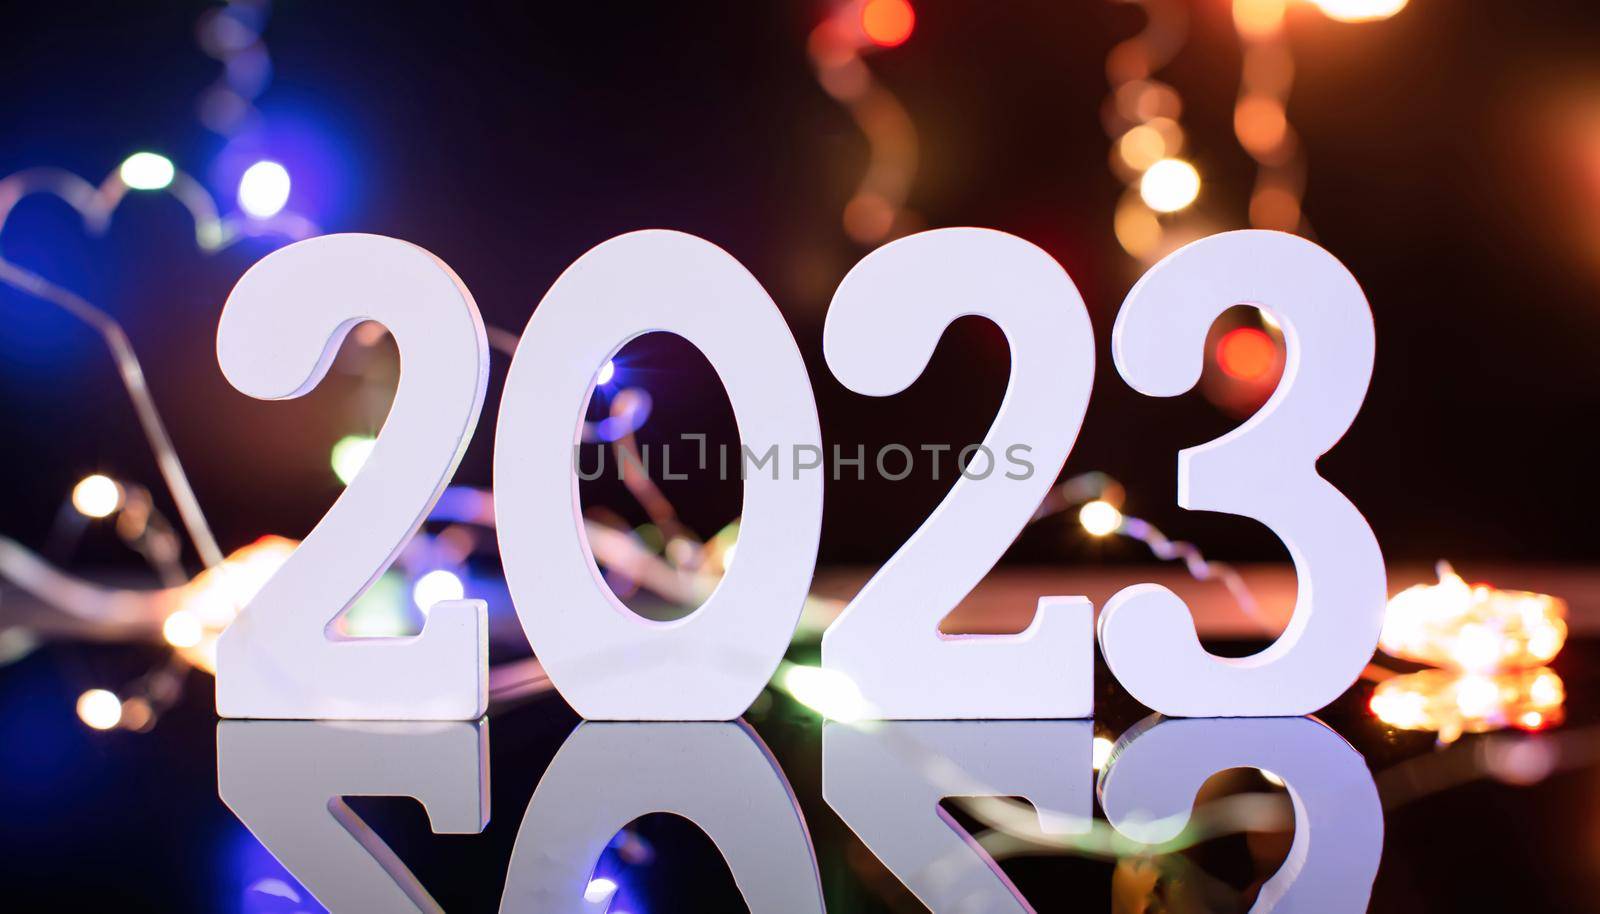 Background to New Year 2023. Beautiful Panoramic web banner